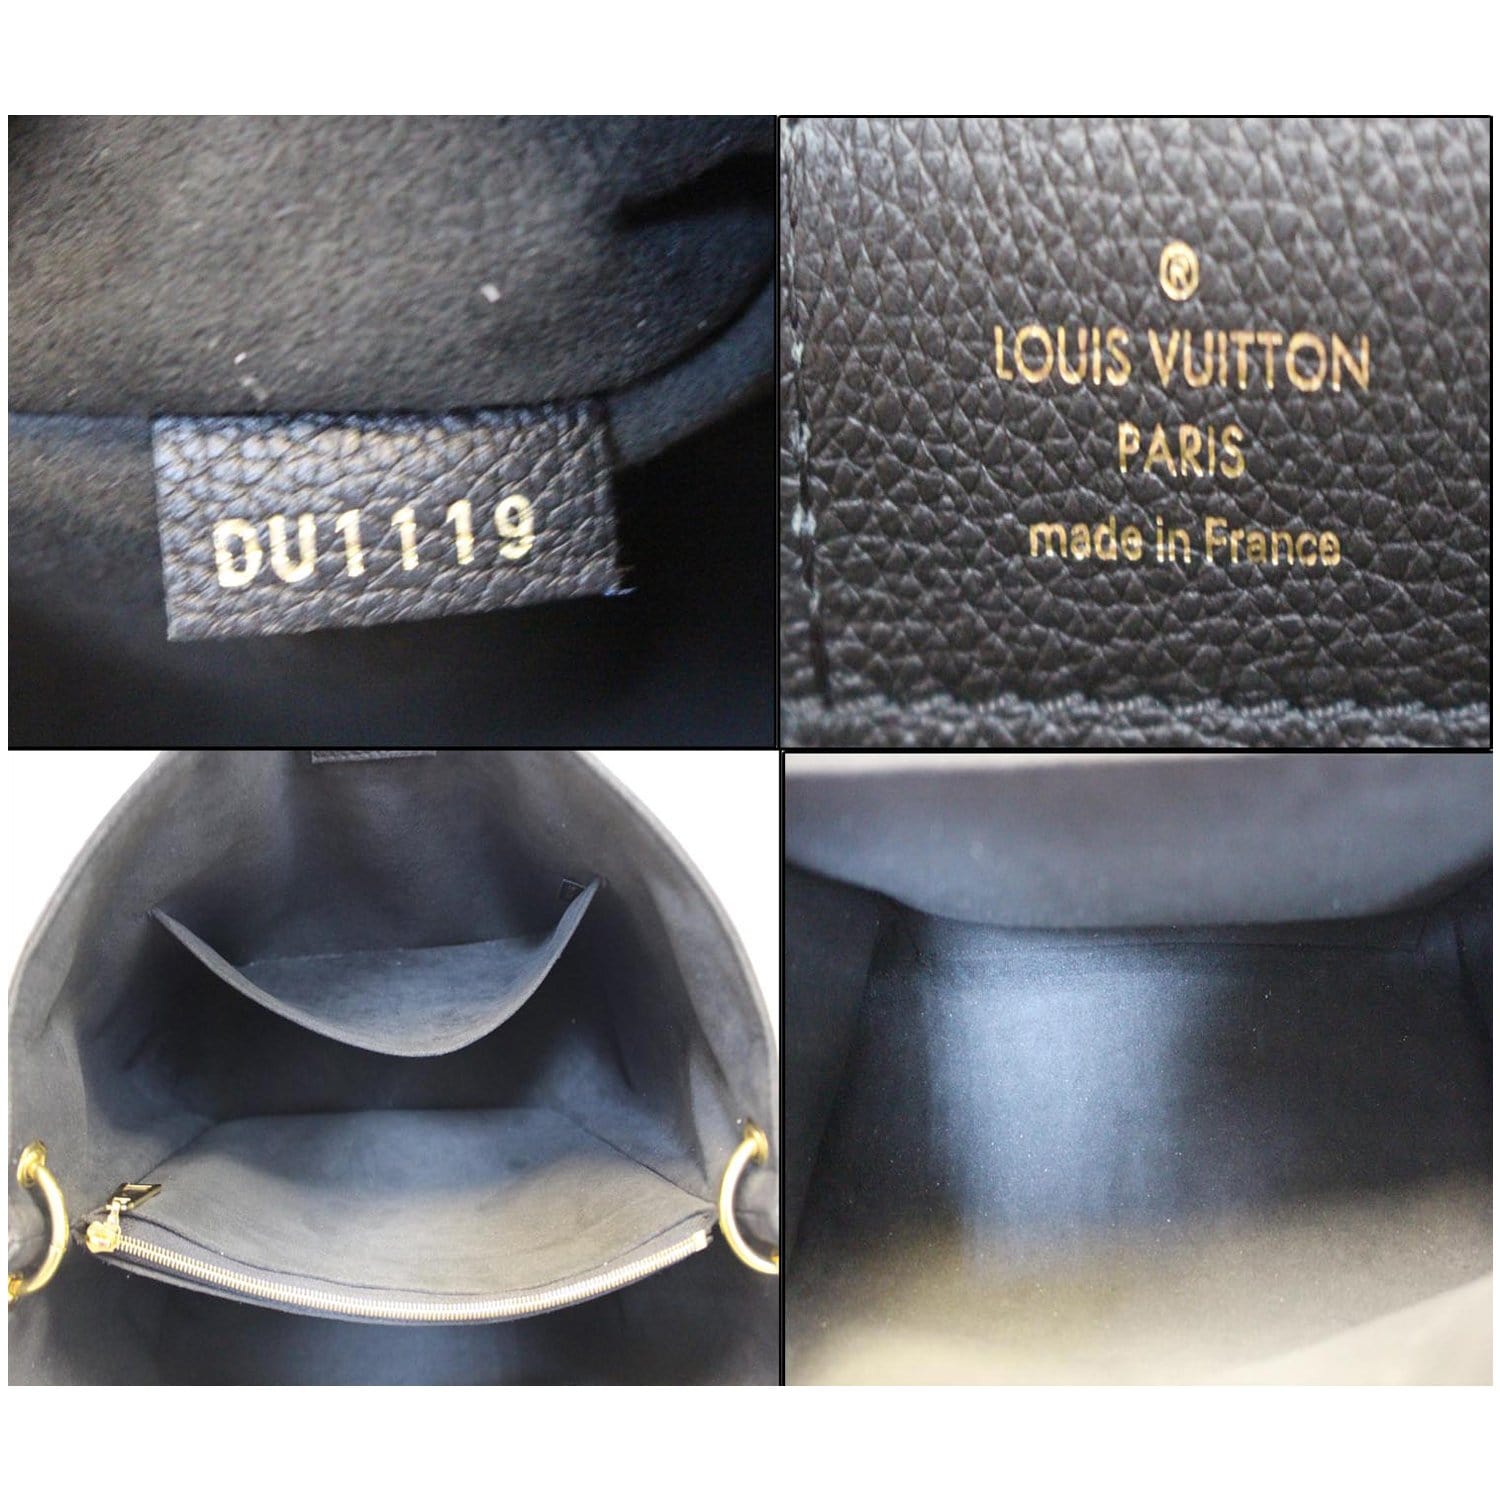 LatterShops - LOUIS VUITTON LV Riverside Damier Ebene Shoulder Bag Brown  Black - DRAGON DIFFUSION Wanaka Leather Tote Yellow Bag